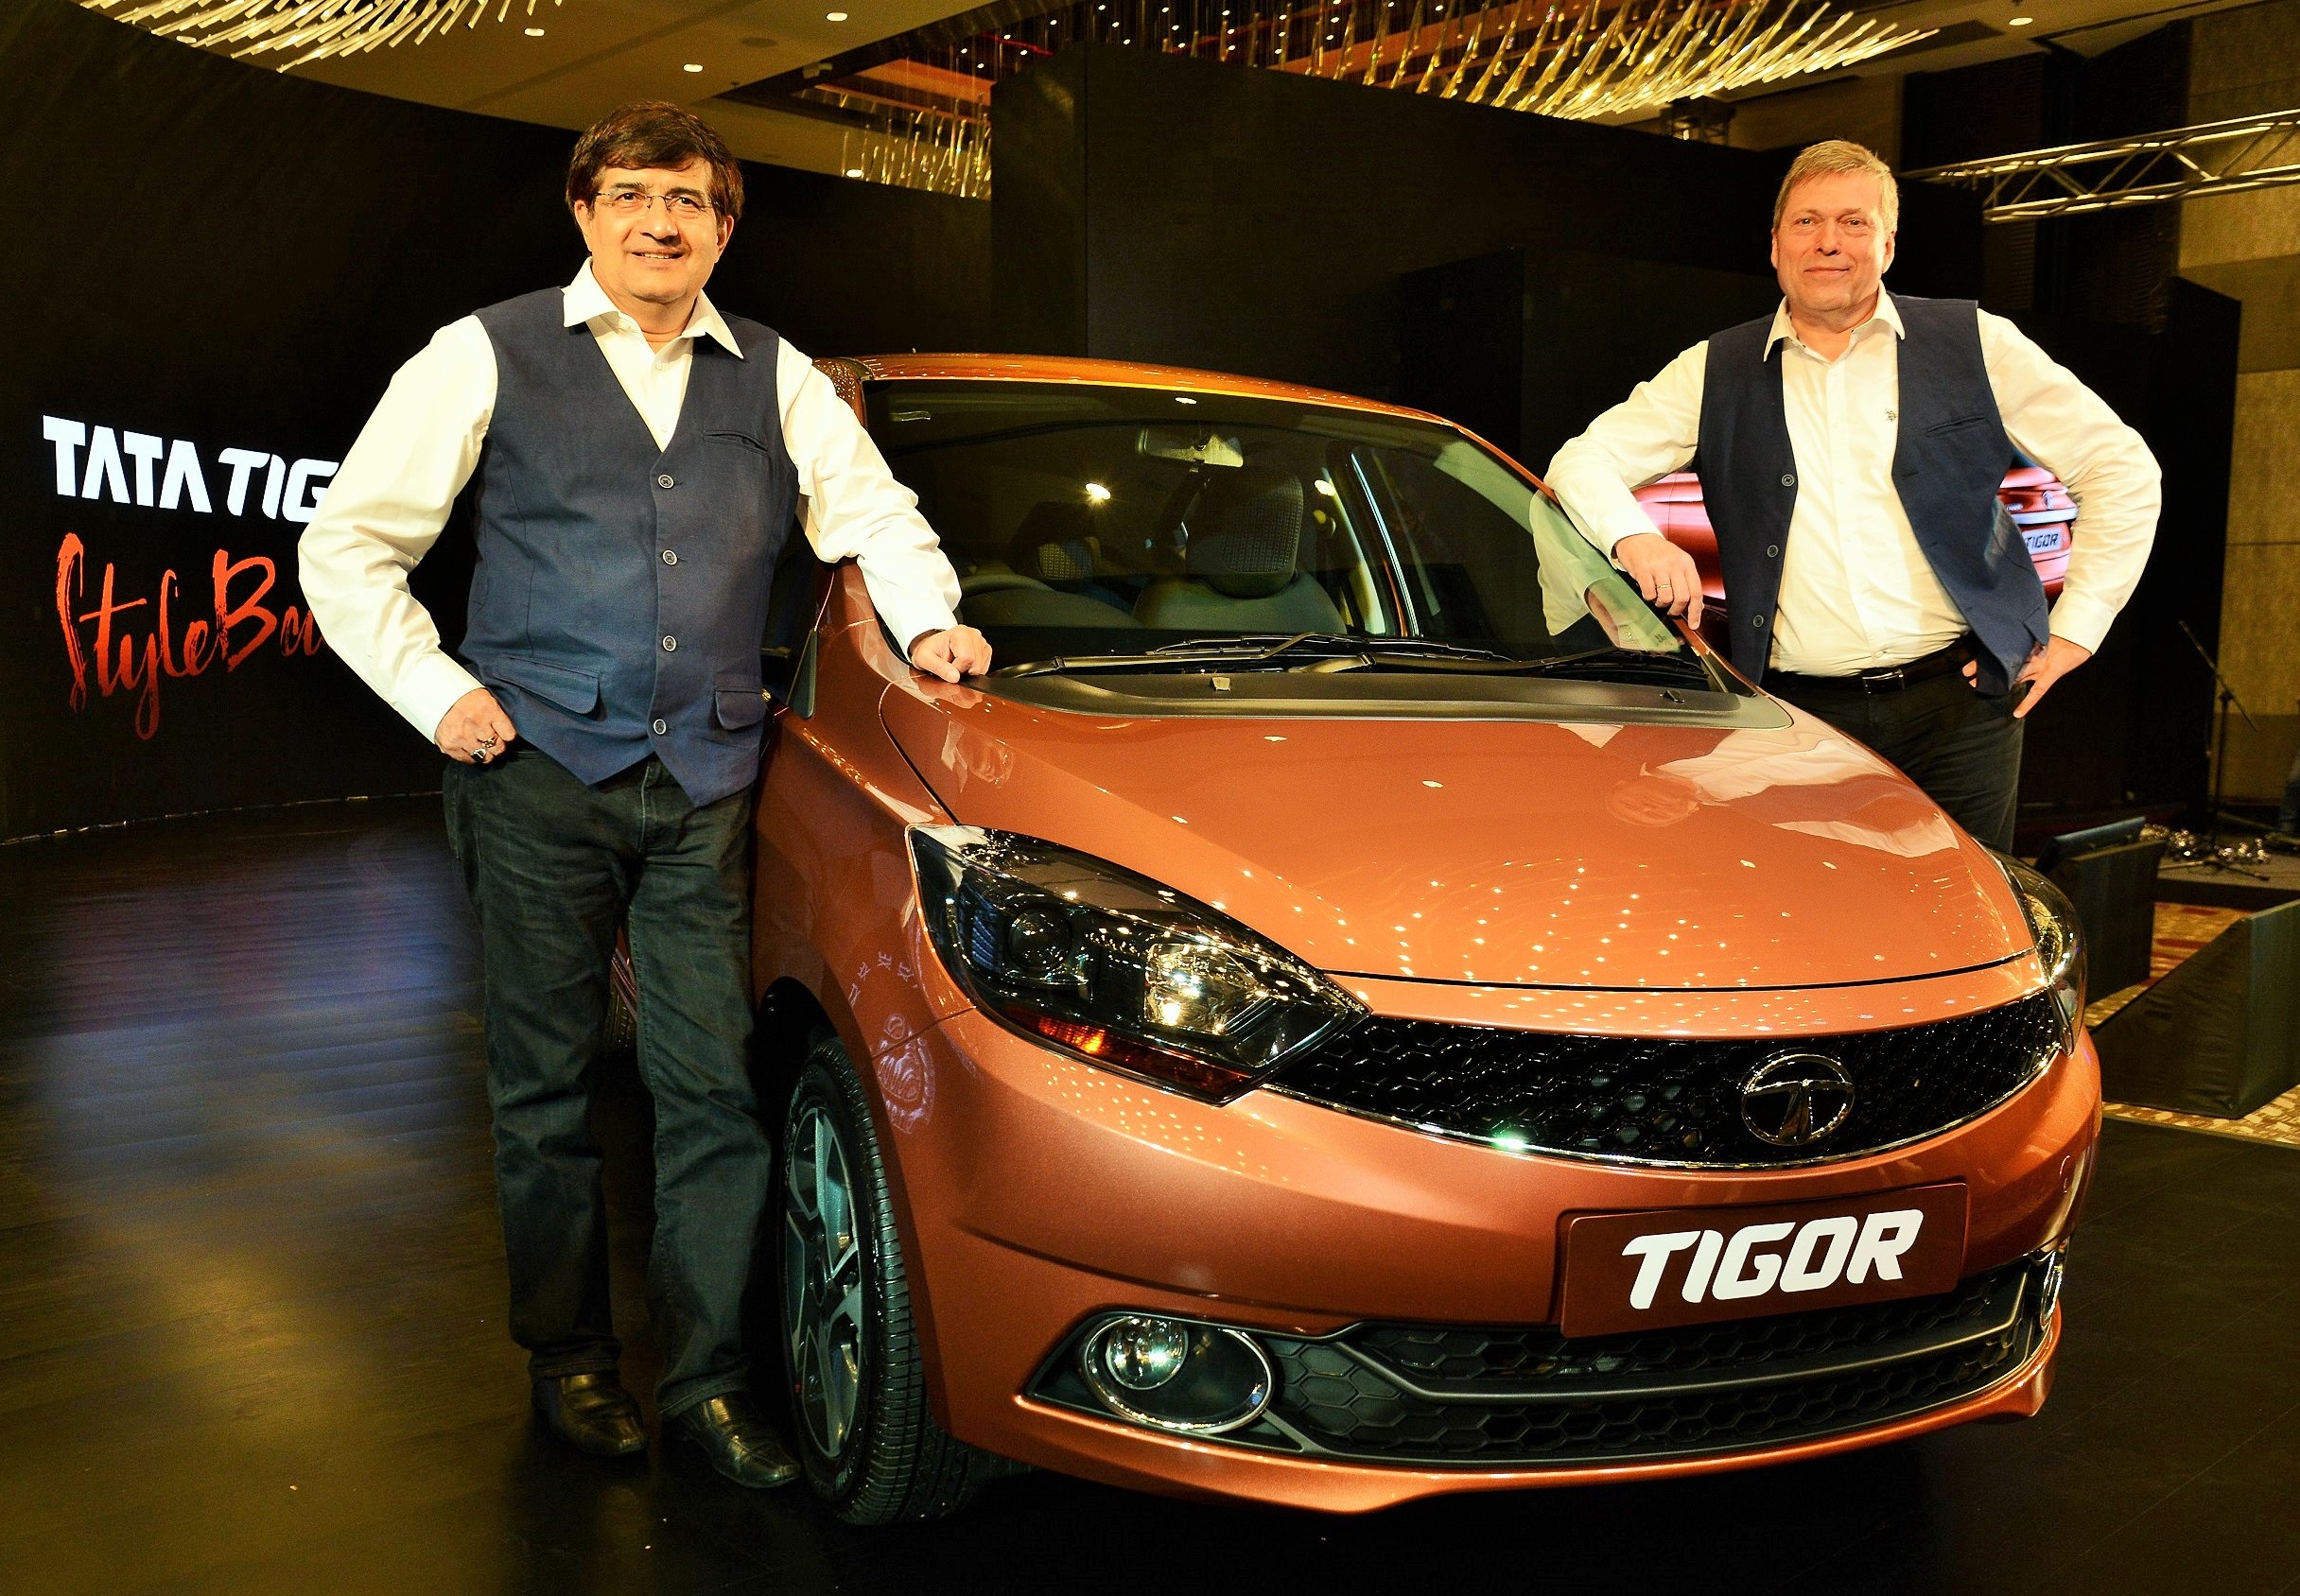 Tata launches its Tigor in India